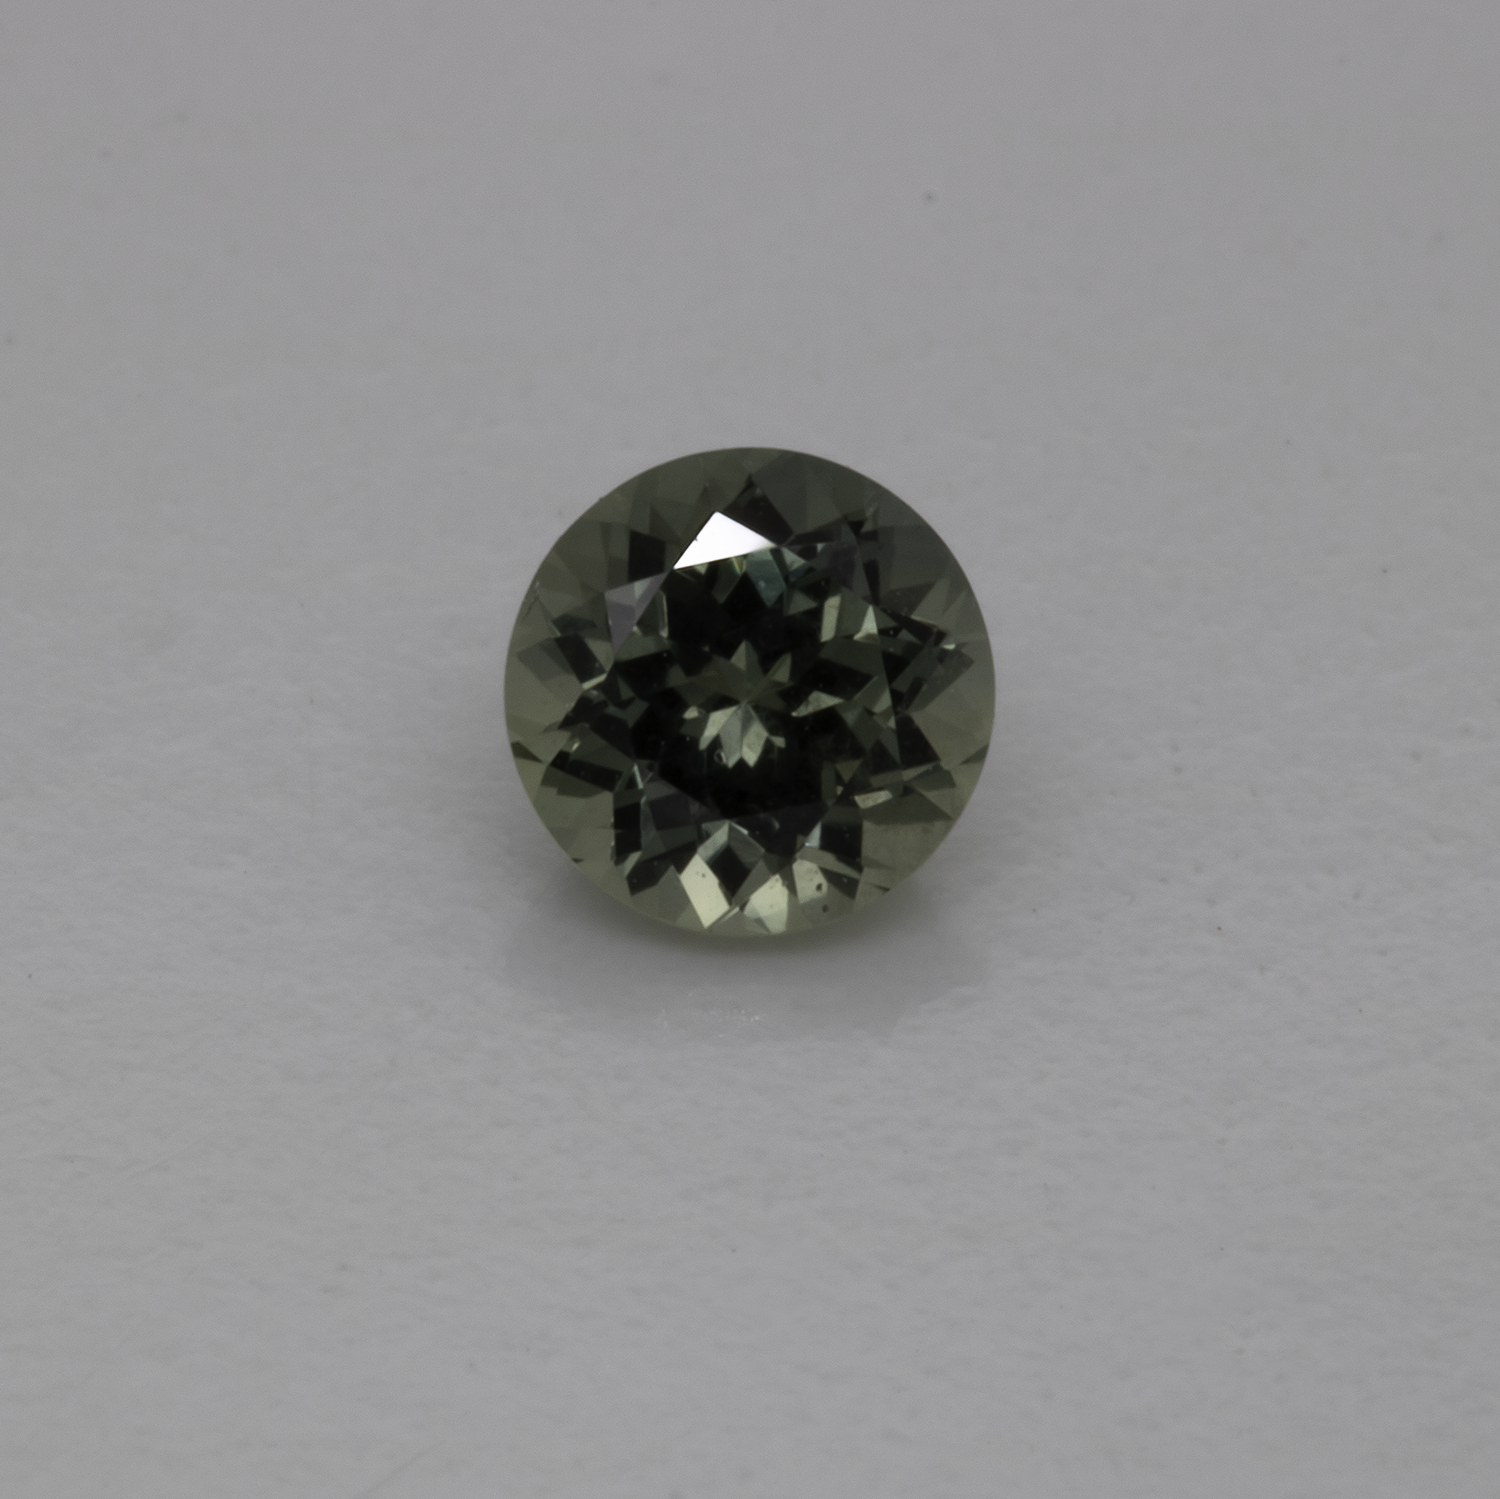 Saphir - grün/grau, rund, 4x4 mm, 0,32 cts, Nr. XSR11229